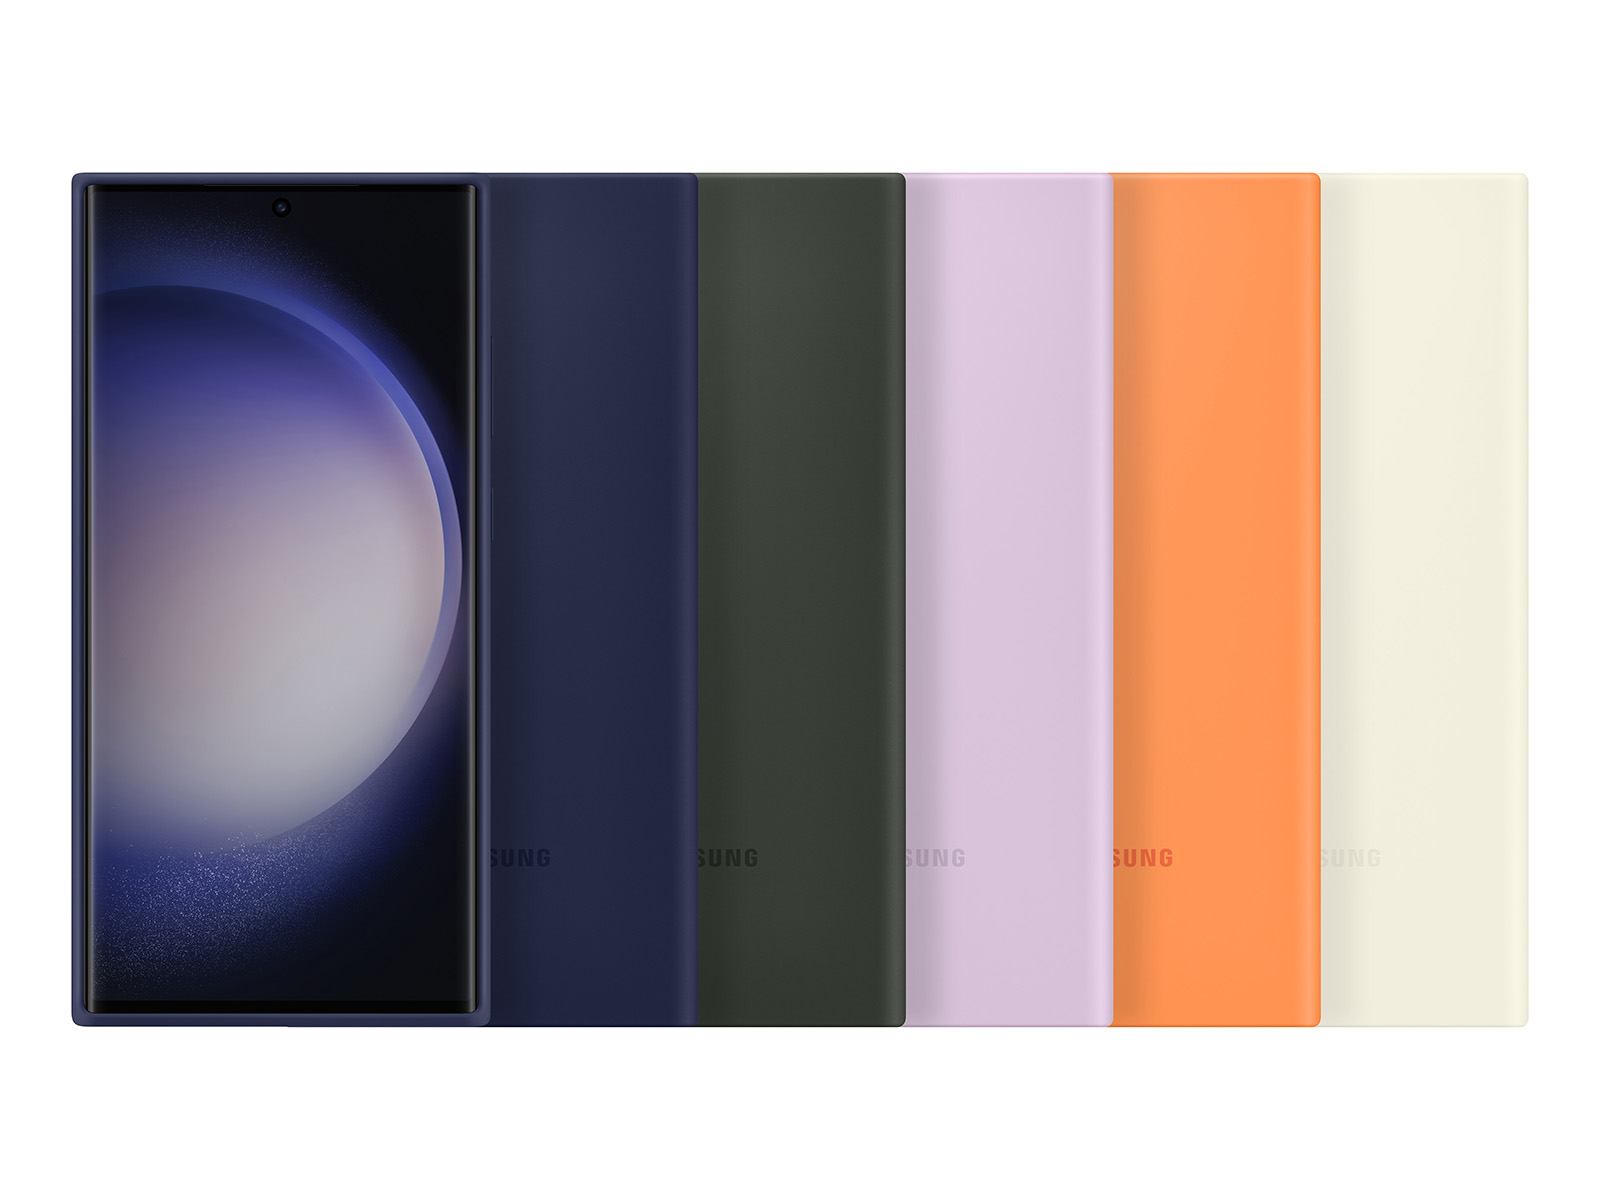 Galaxy S23 Ultra Silicone Case, Orange Mobile Accessories - EF-PS918TOEGUS